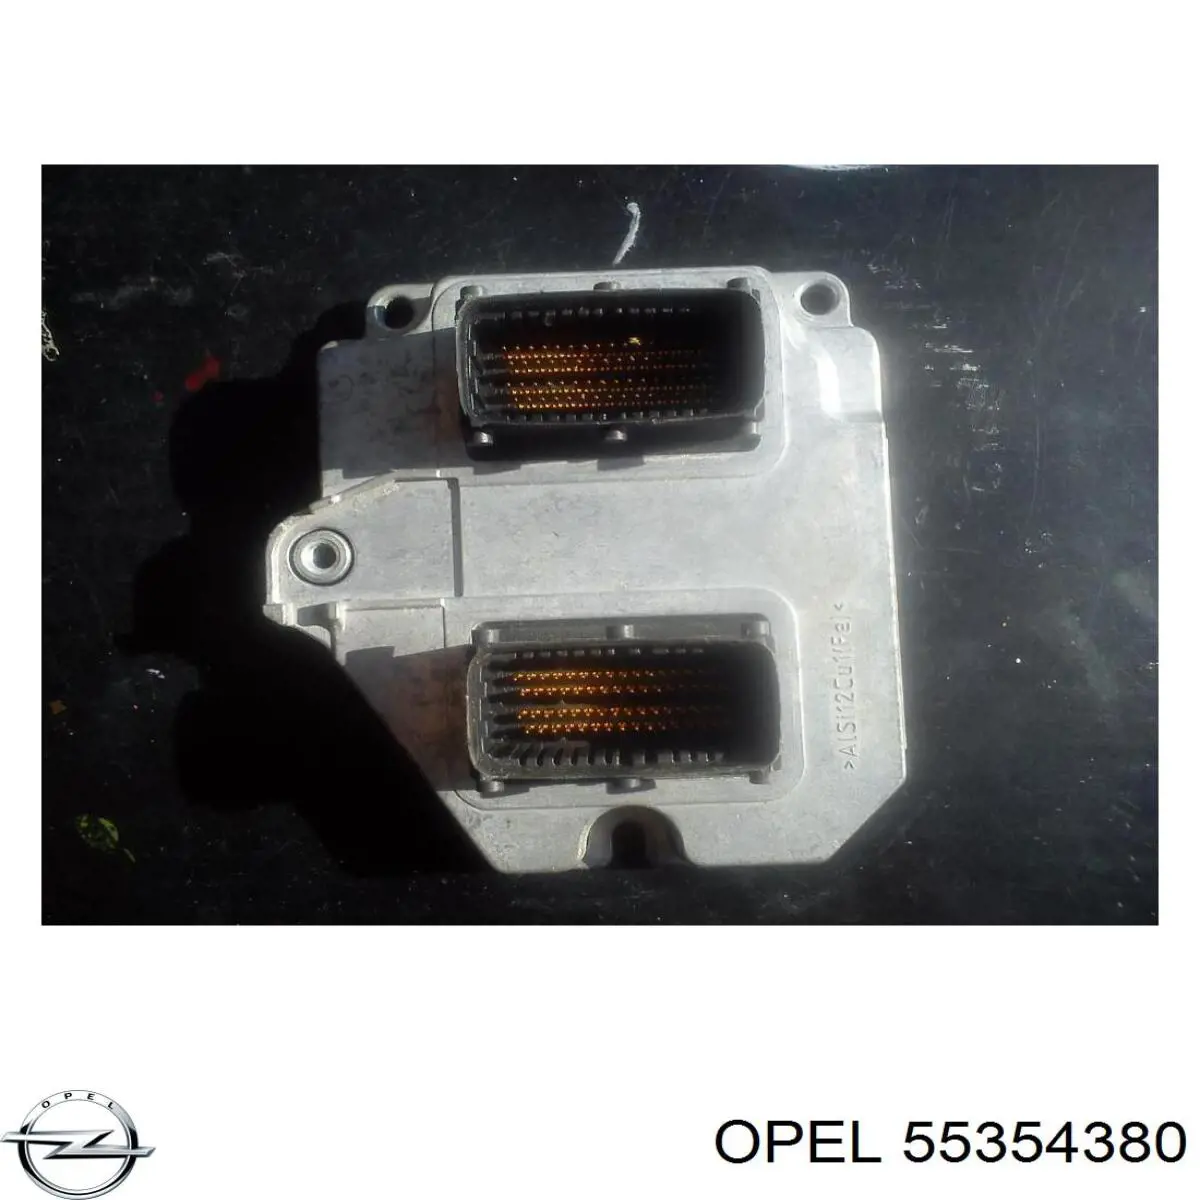 6235175 Opel módulo de control del motor (ecu)